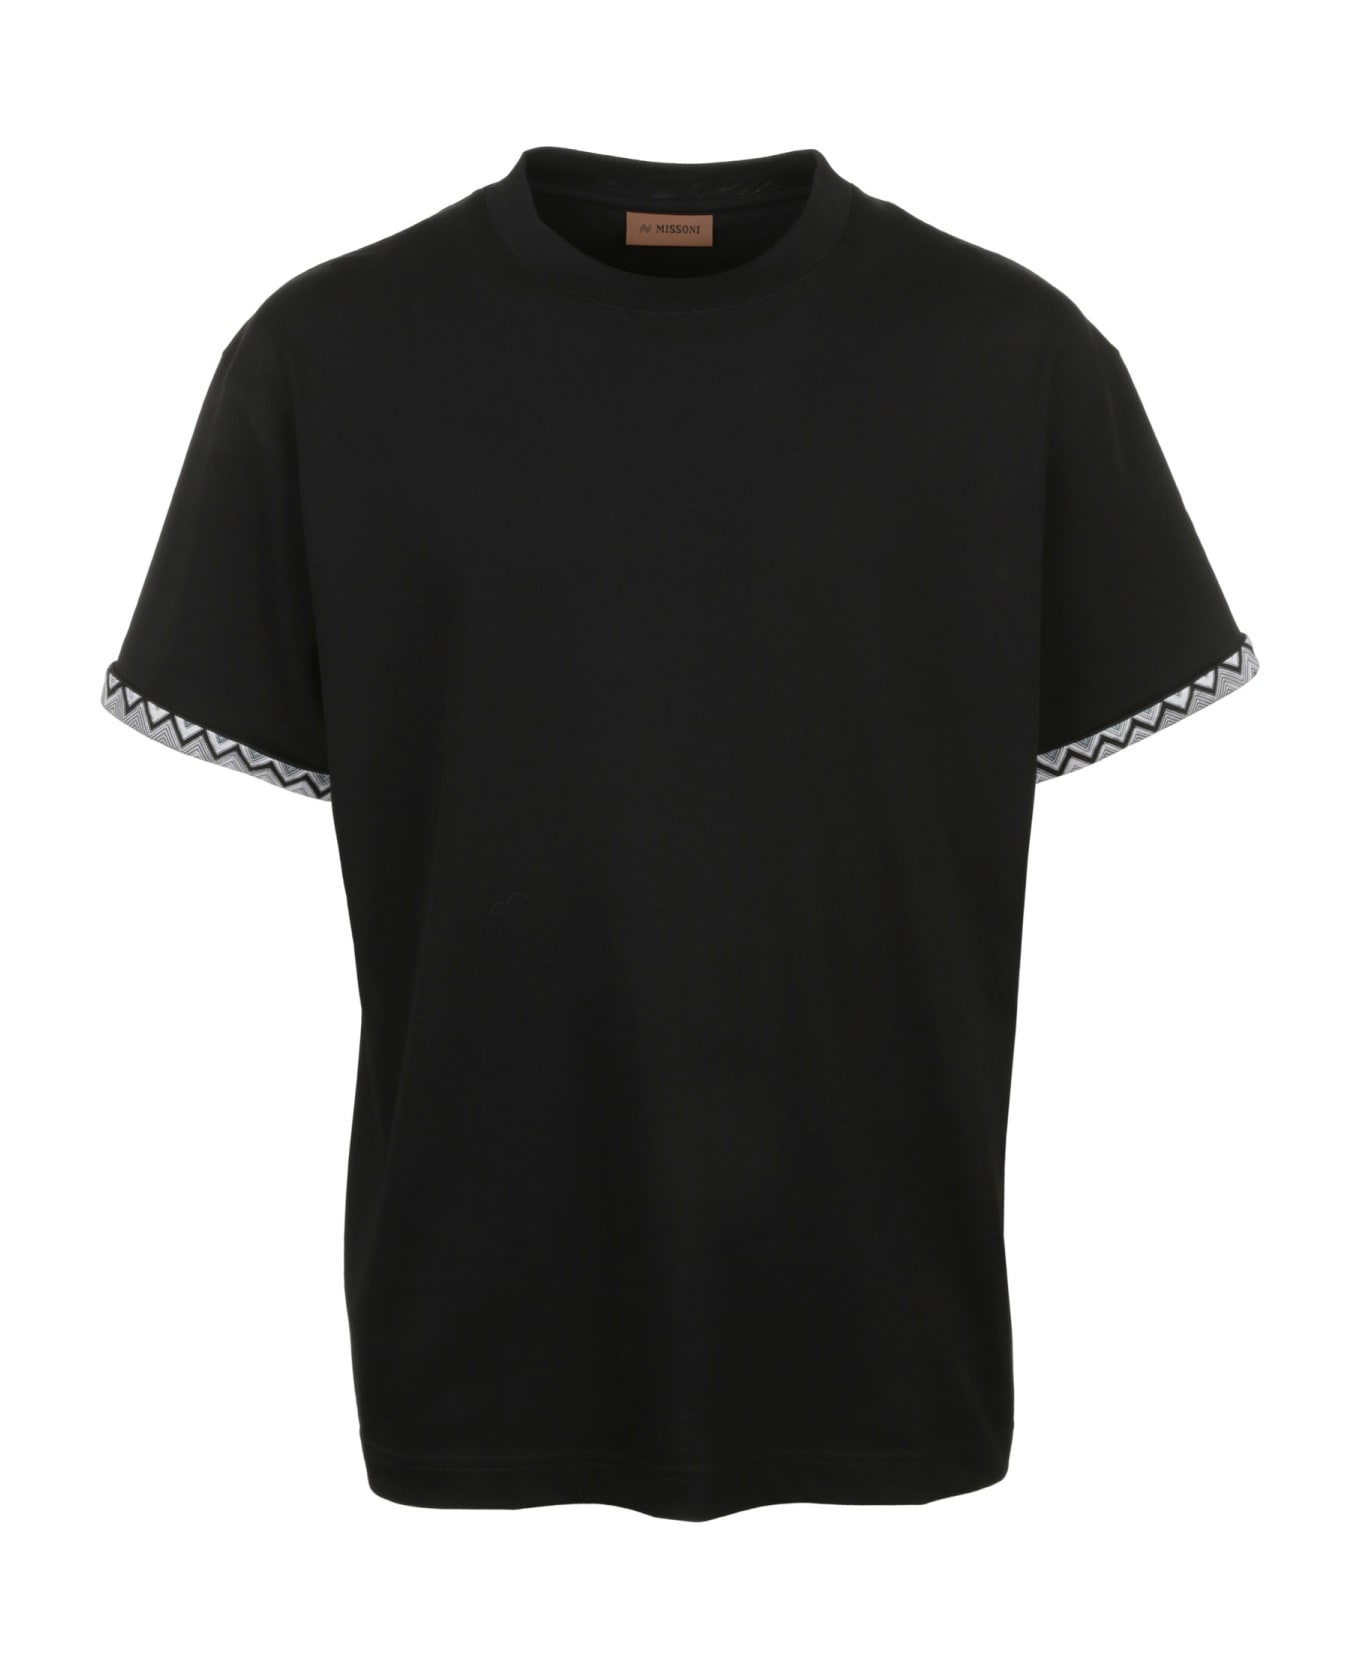 Missoni Short Sleeve Shirt - Dk Black Base With Multicolor Details